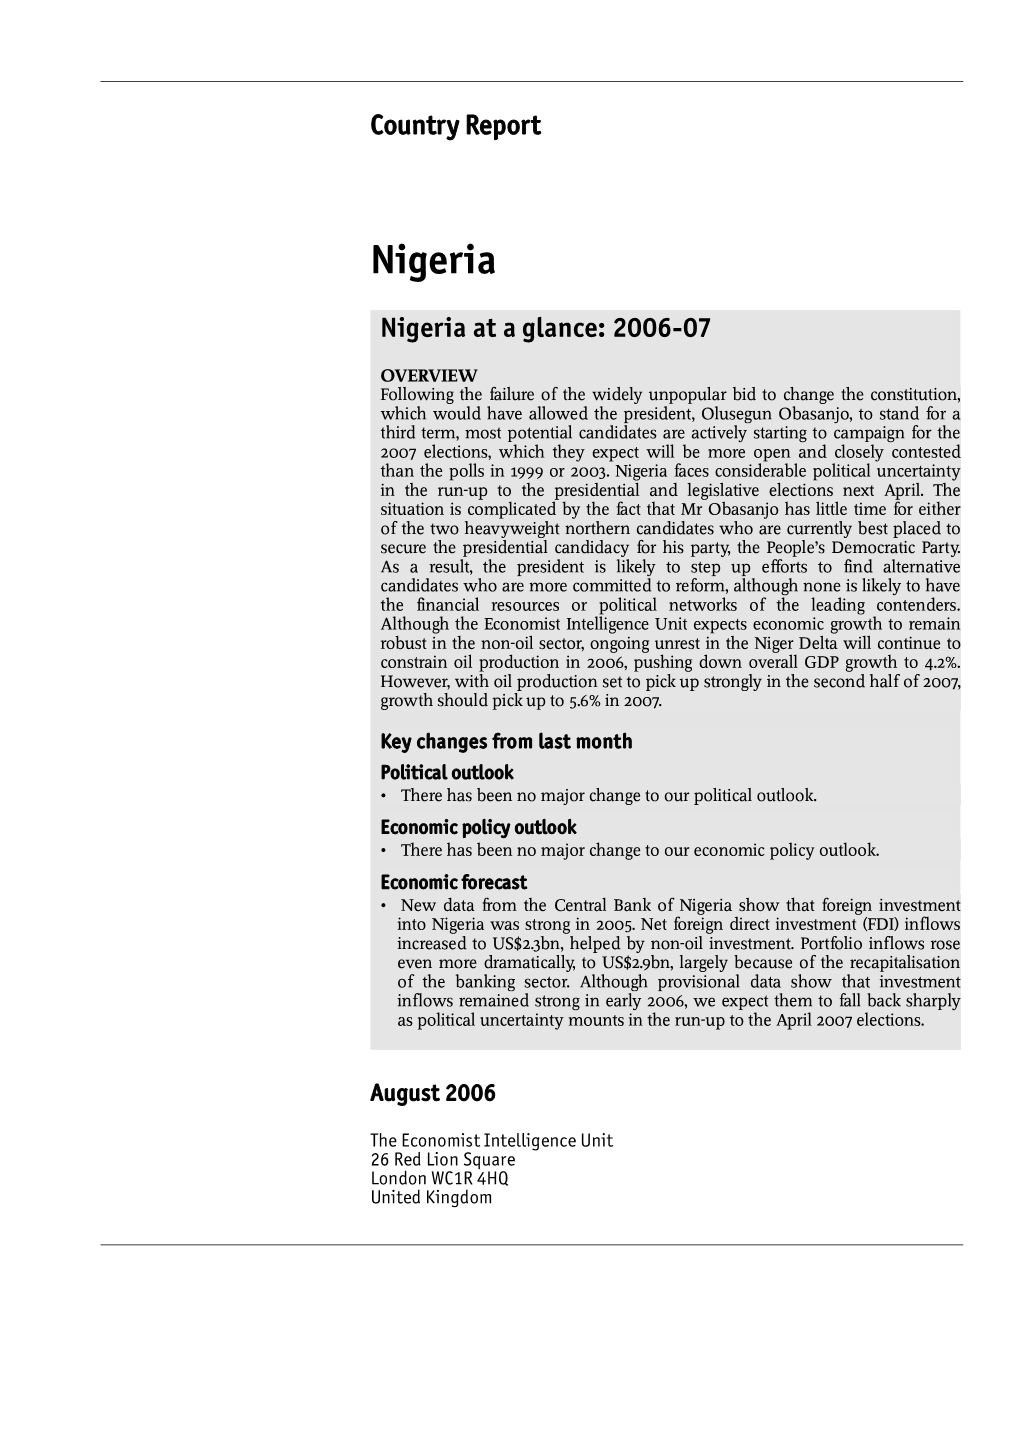 Nigeria at a Glance: 2006-07